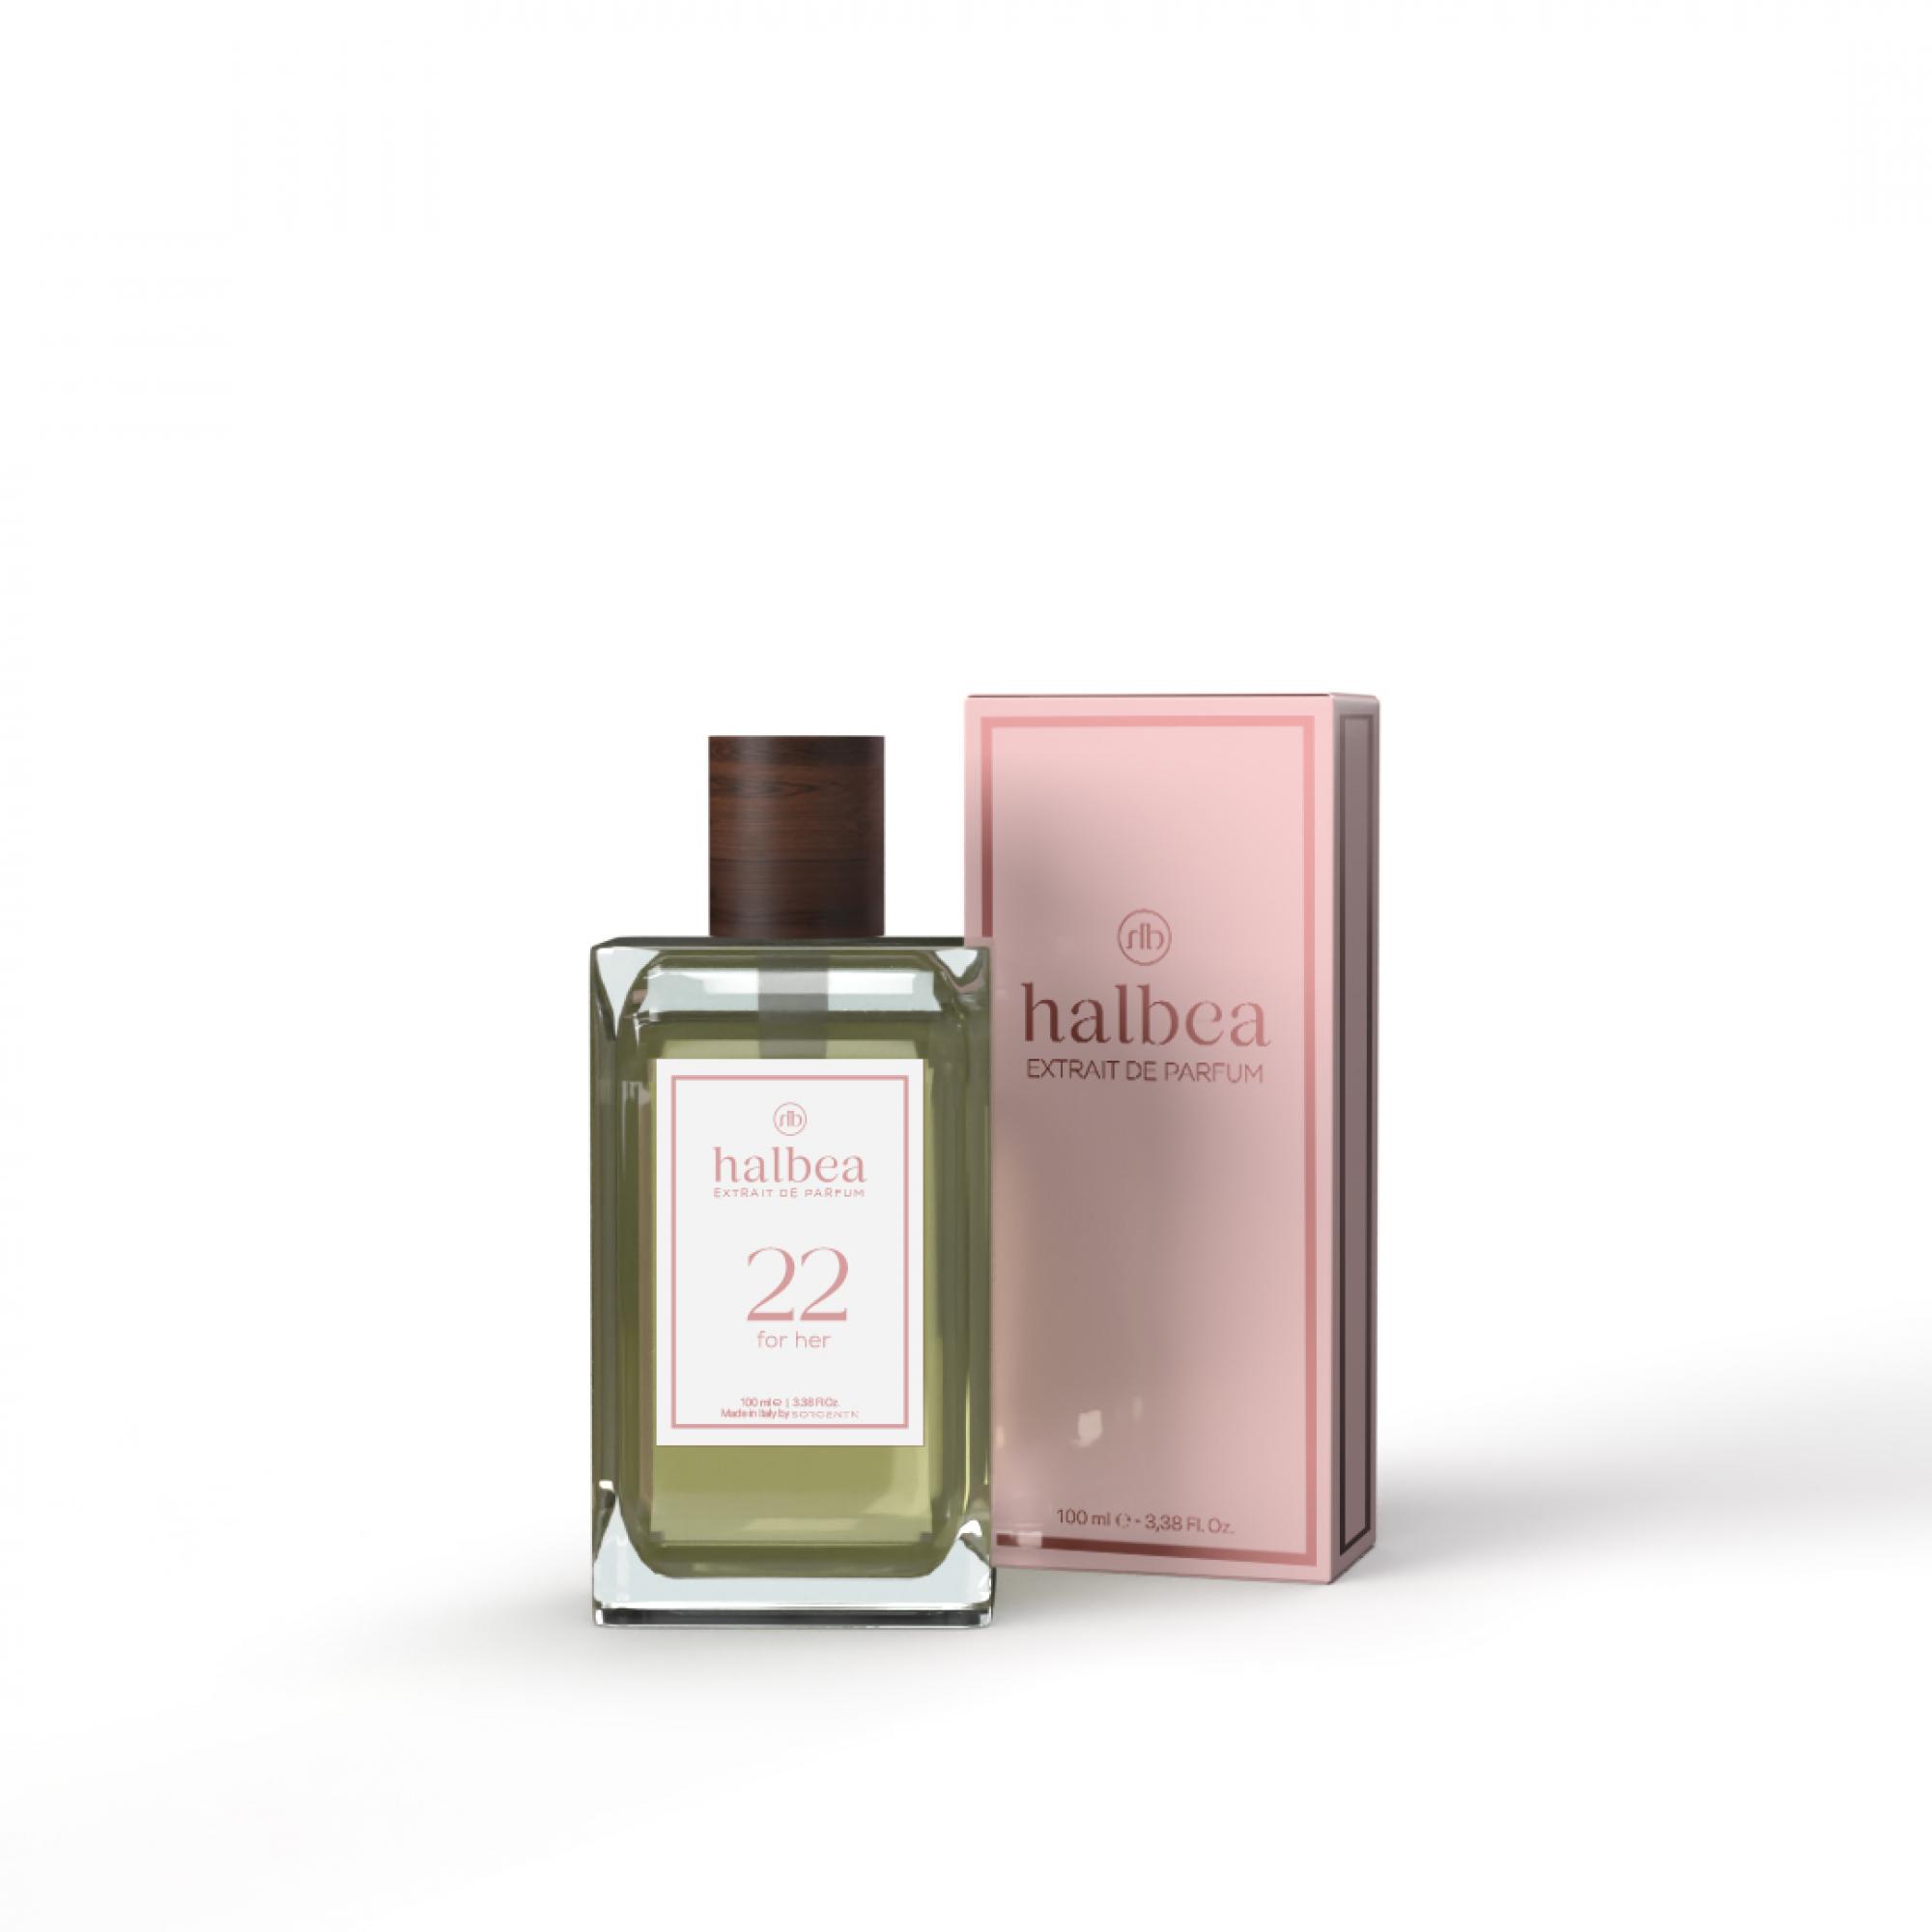 Halbea Parfum Nr. 22 insp. by Thierry Mugler Alien 100ml